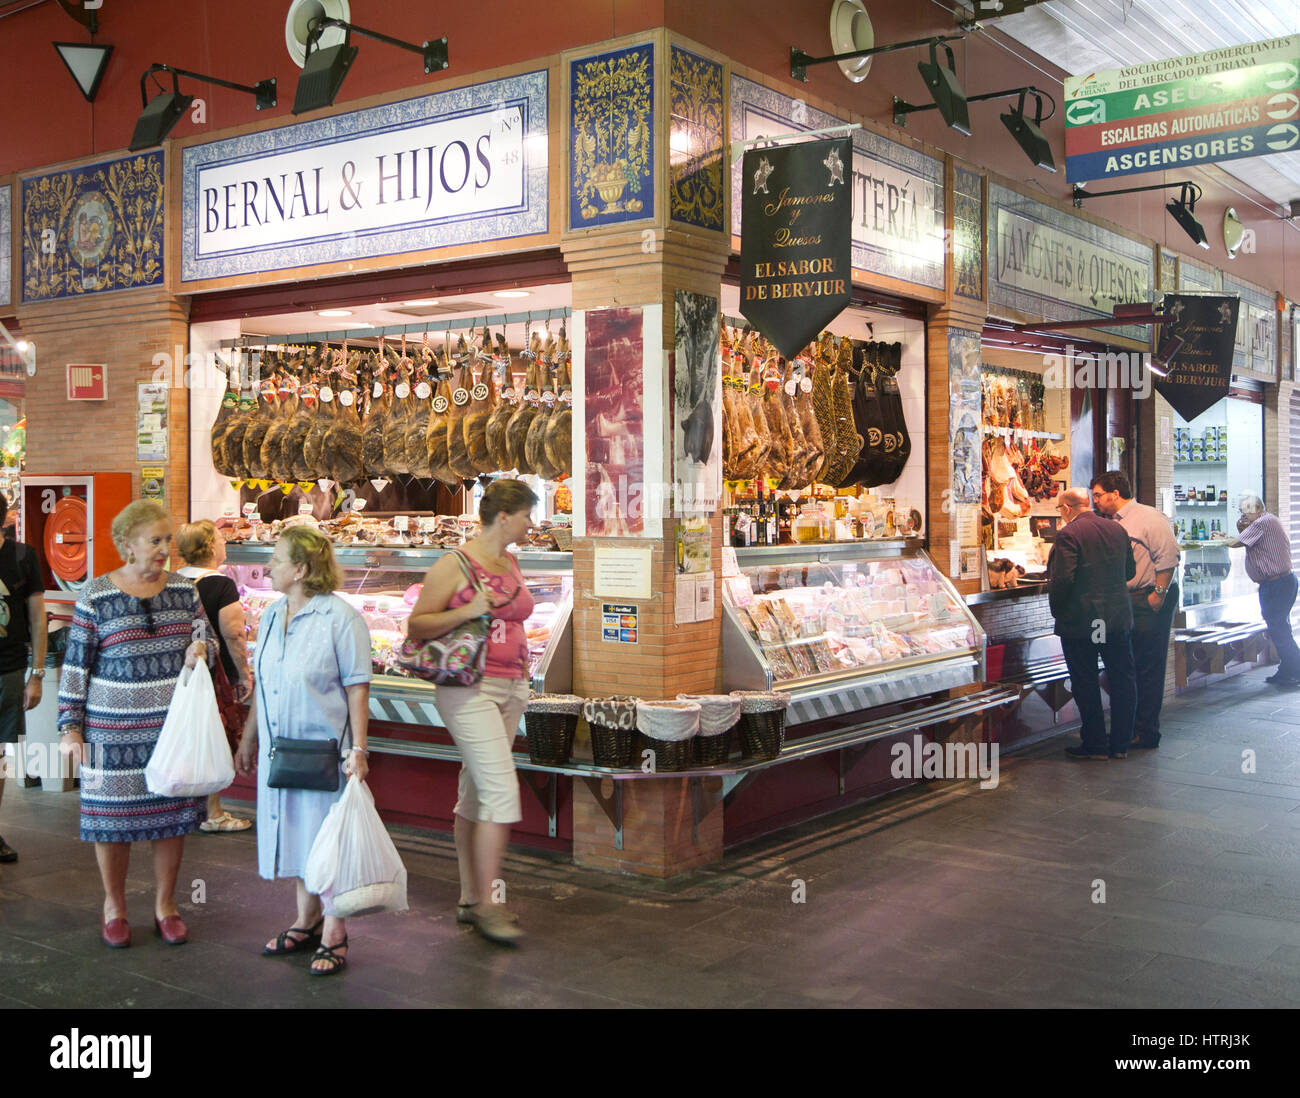 Market stalls inside historic market building in Triana, city of Seville,  Spain Stock Photo - Alamy